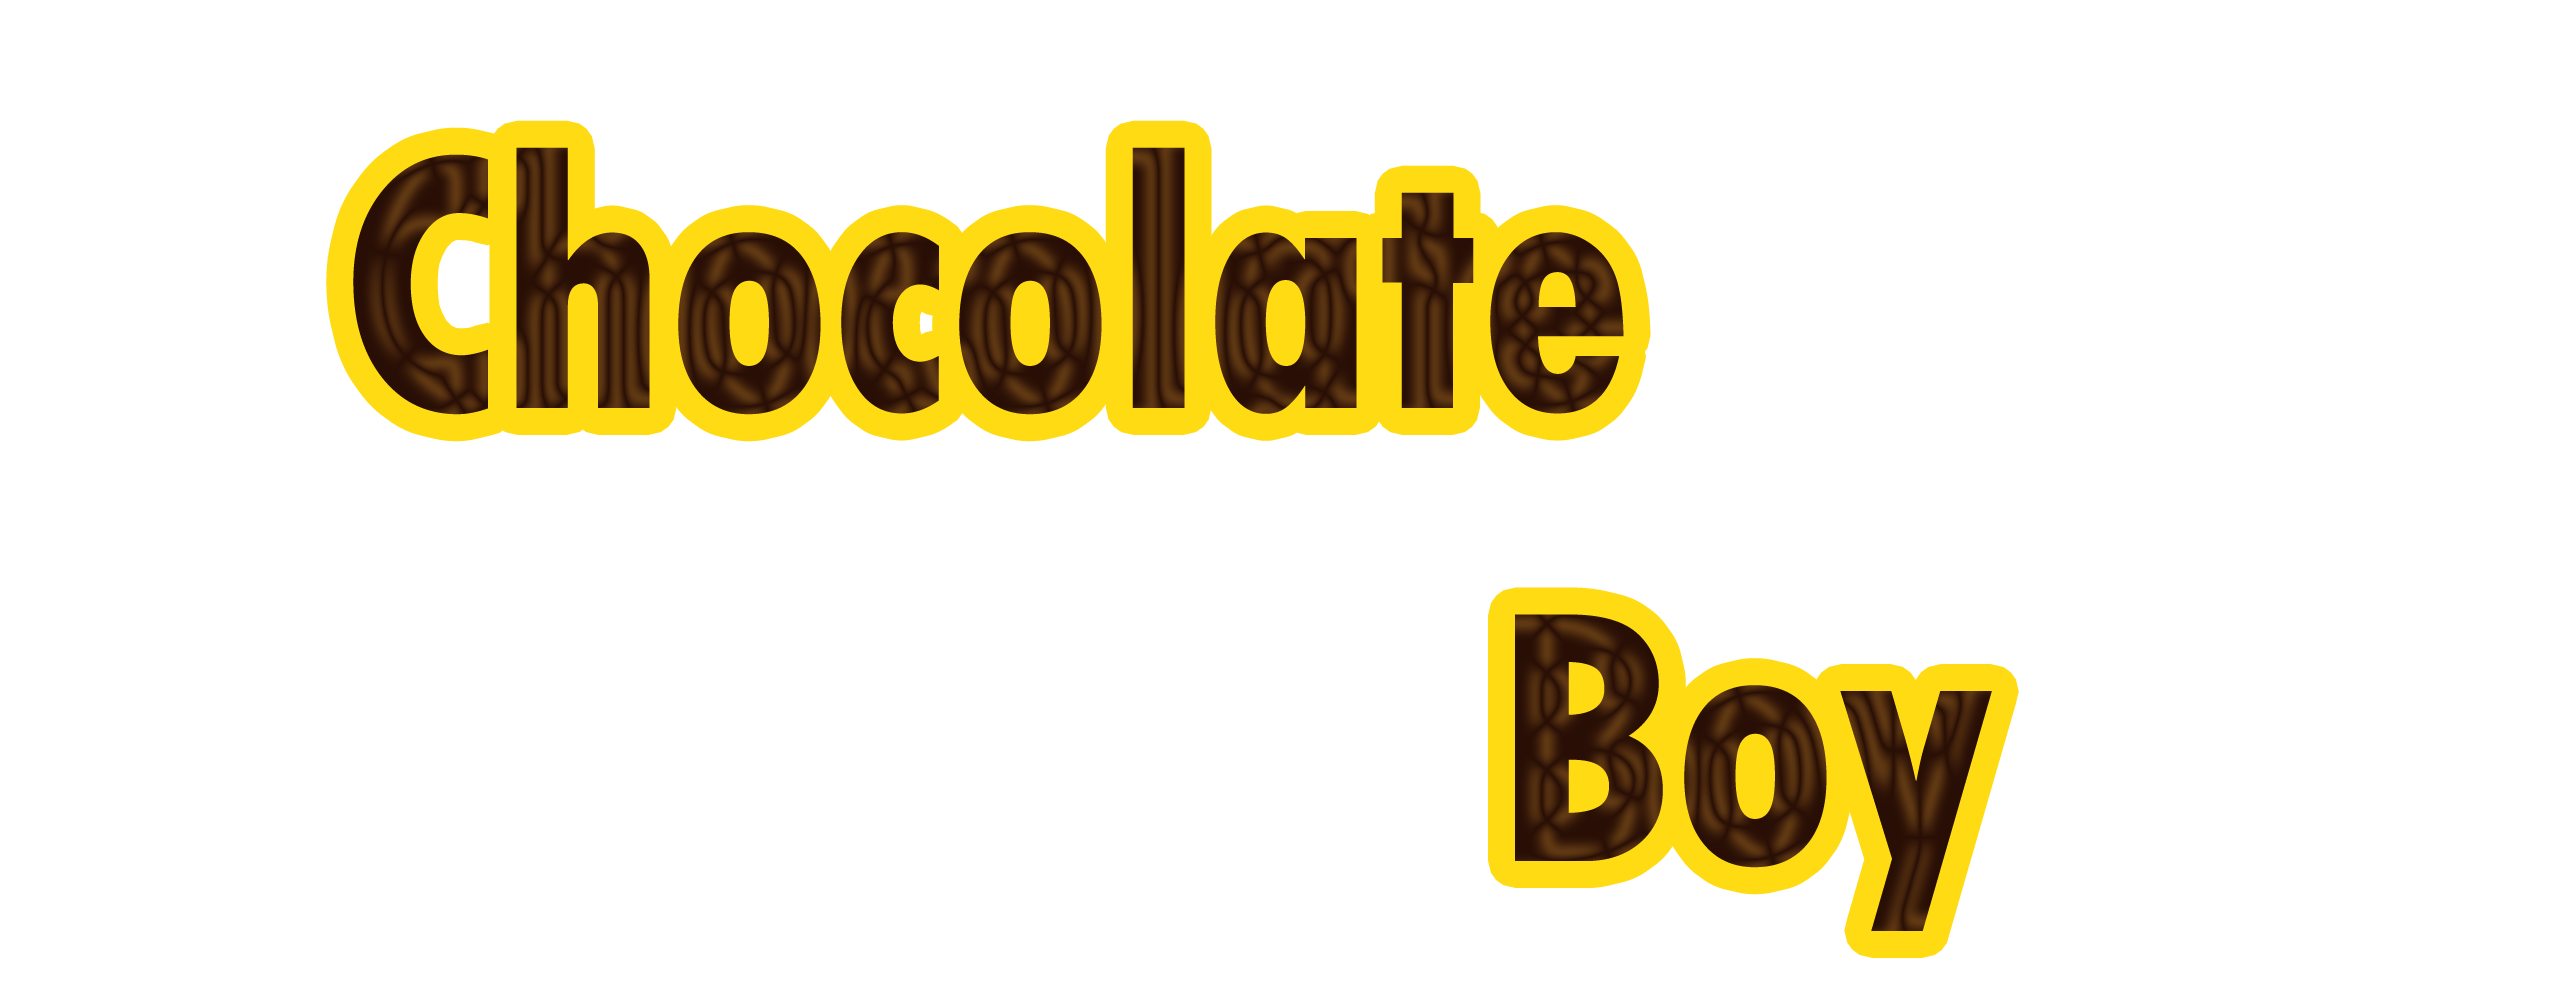 Chocolate Boy #9